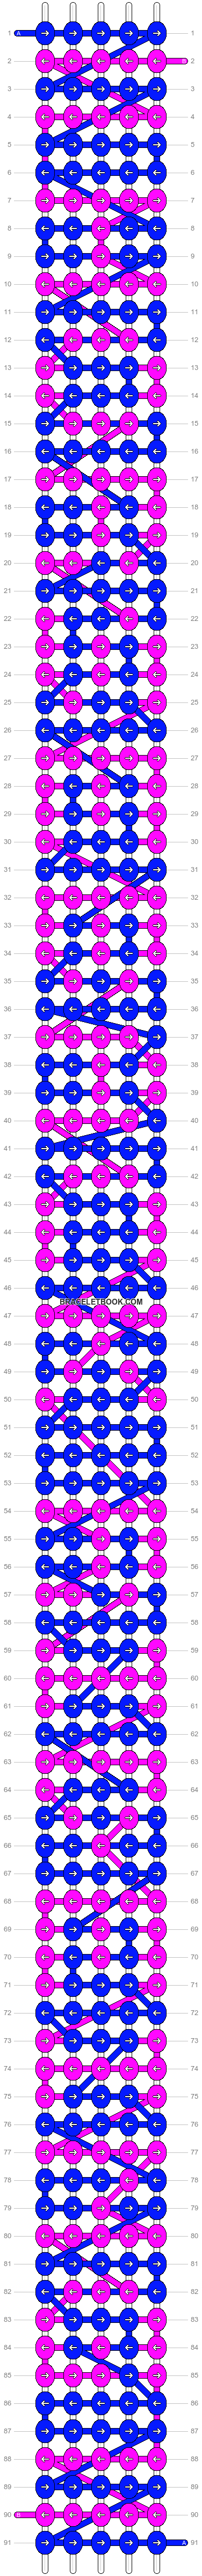 Alpha pattern #1597 variation #46846 pattern